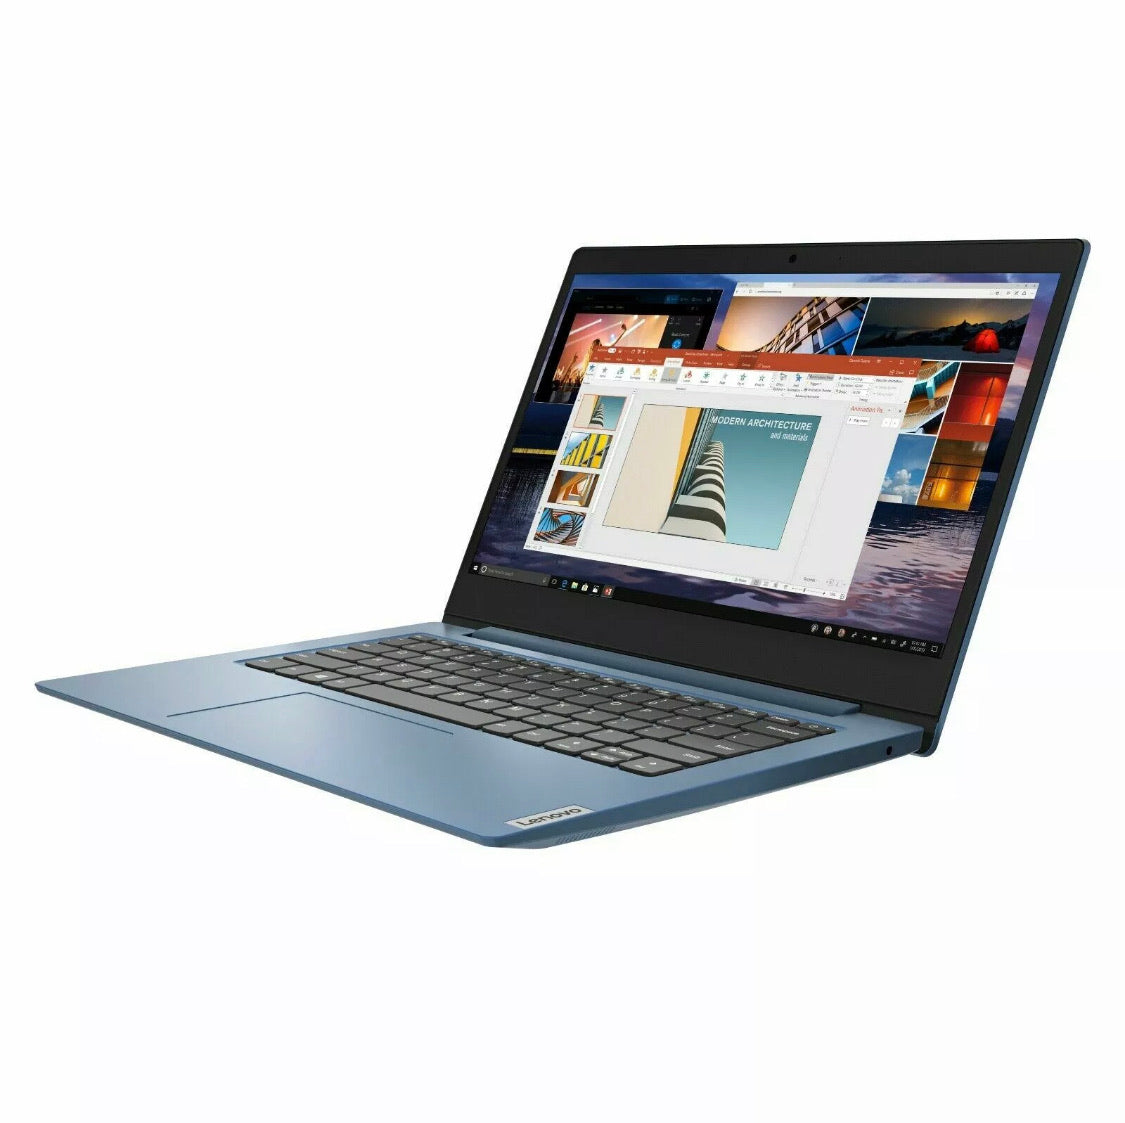 NEW Lenovo 14" HD Intel Quad-Core 3.10GHz 128GB SSD 4GB RAM Win10 Blue Laptop